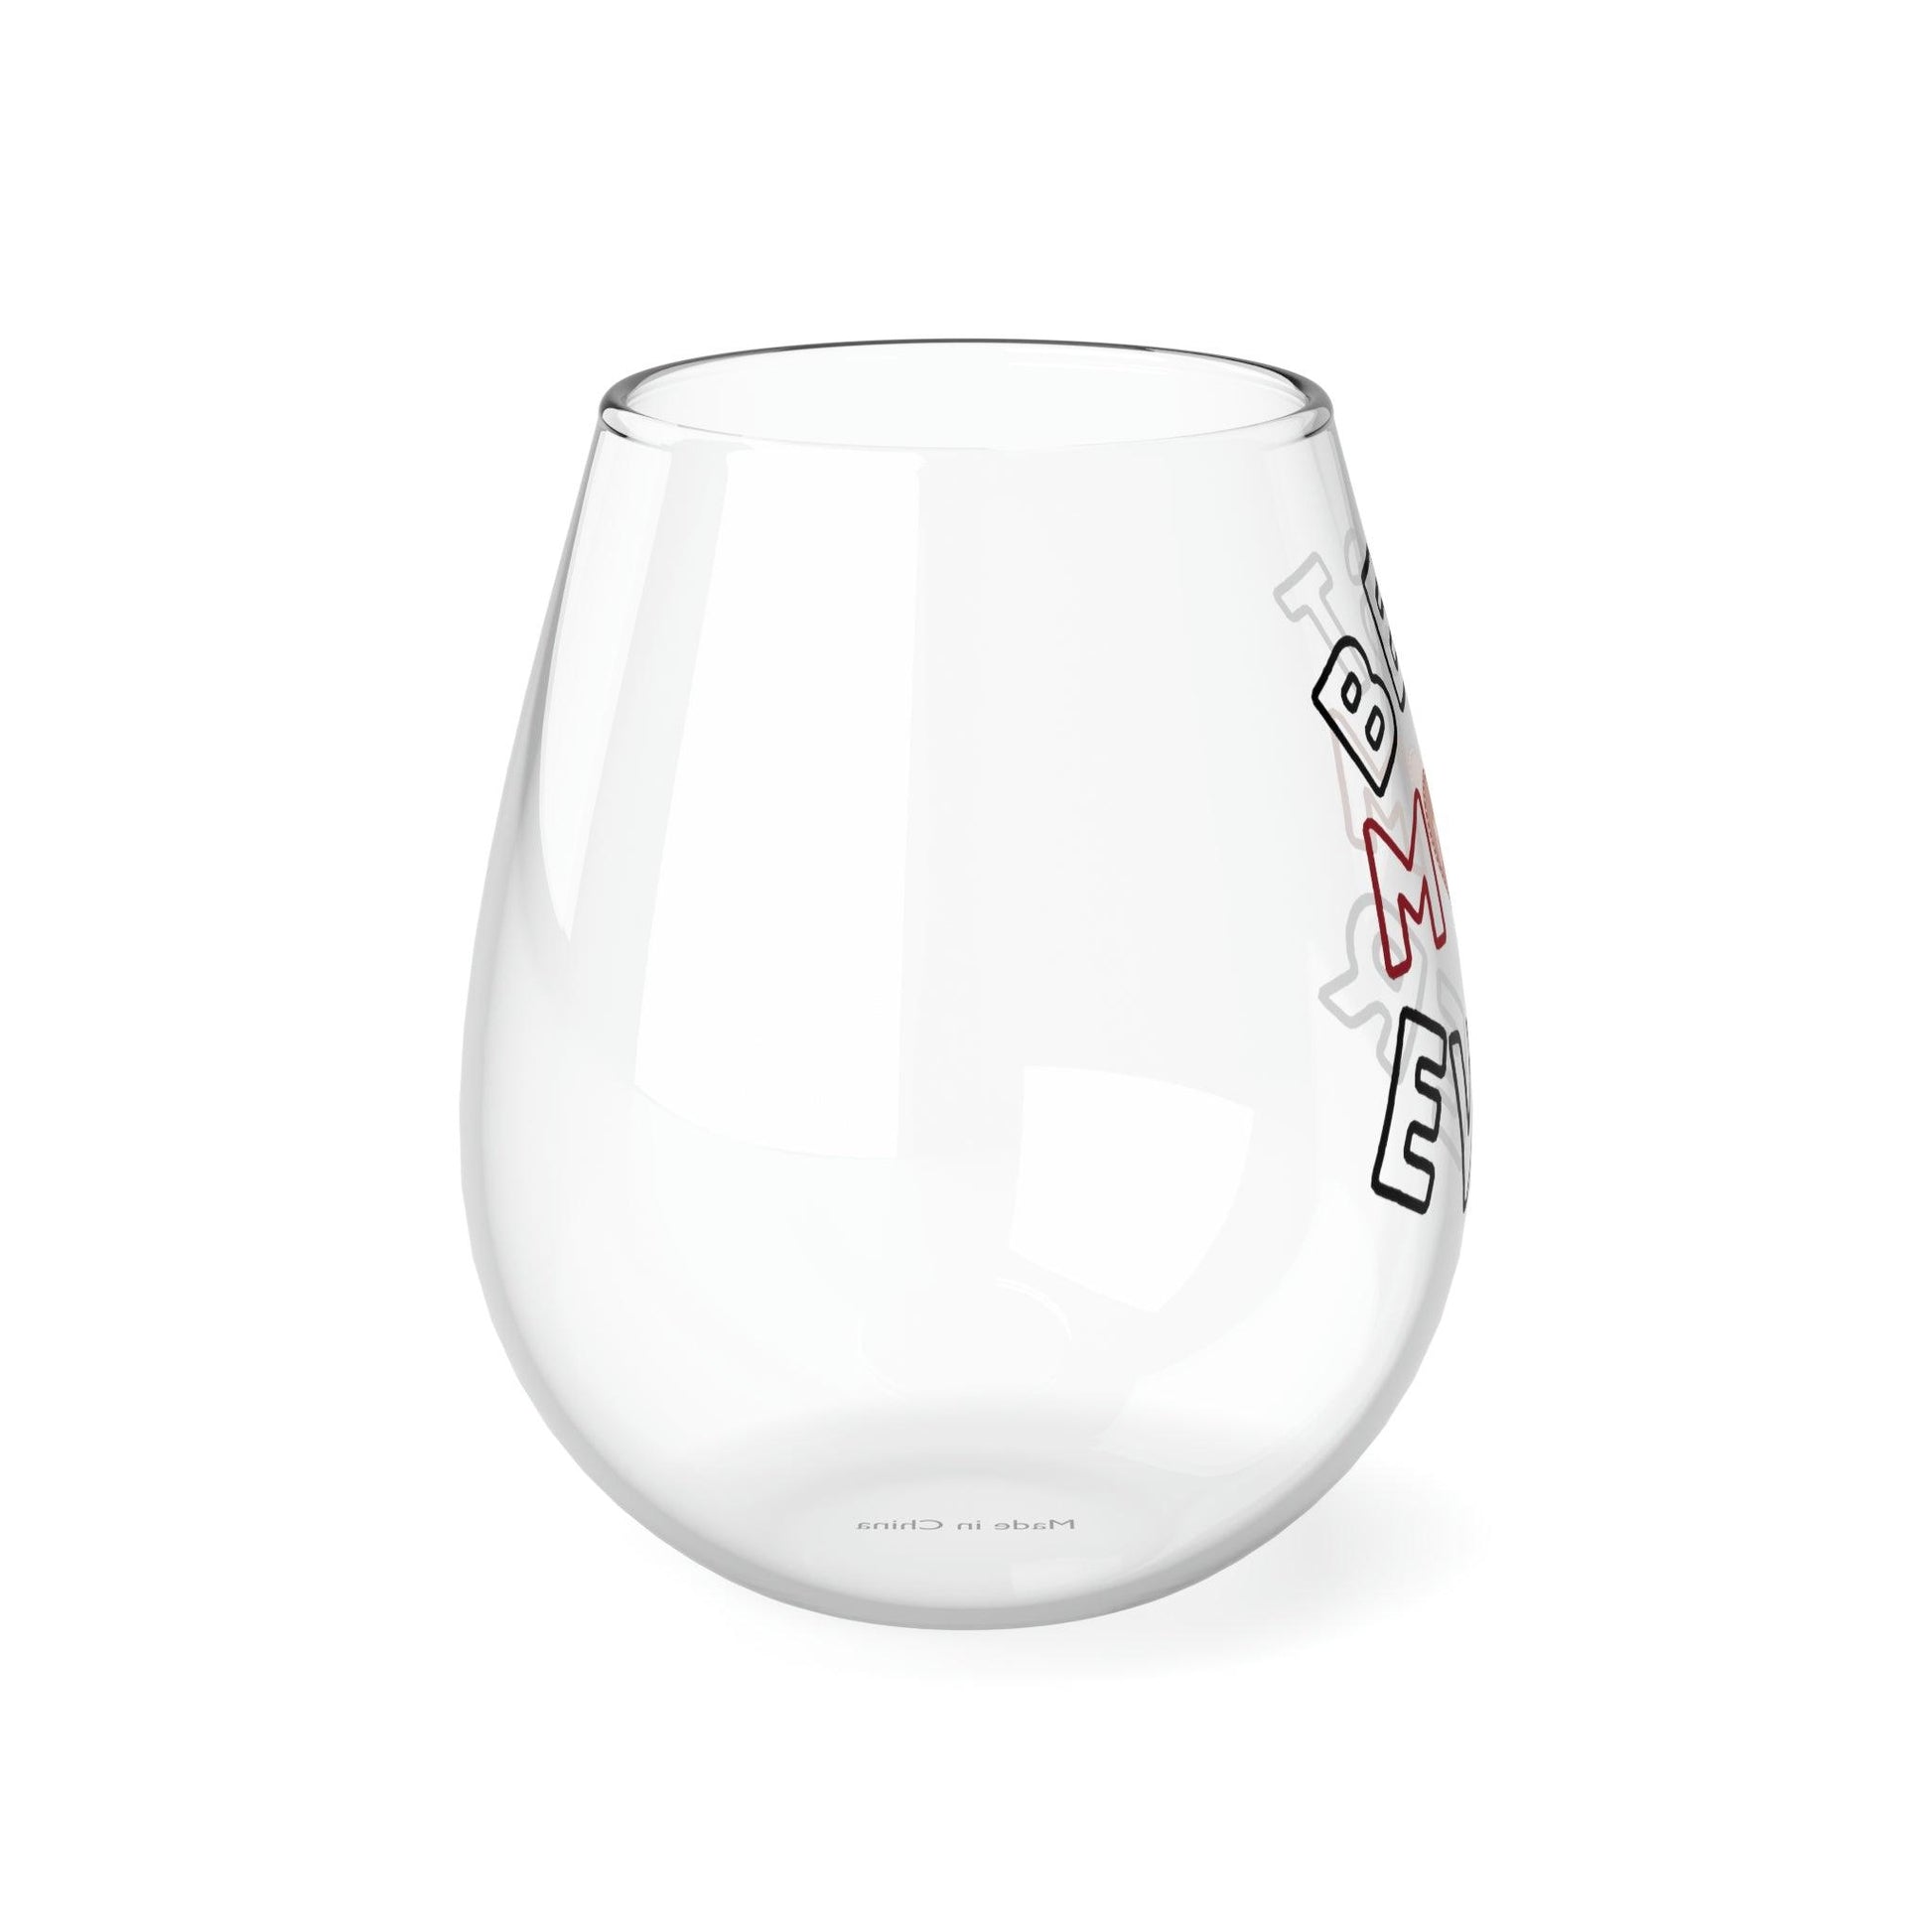 Mom wine glass Best Mom Ever Wine Glass - Mother's Day Wine glass Gift for Mom - Giftsmojo